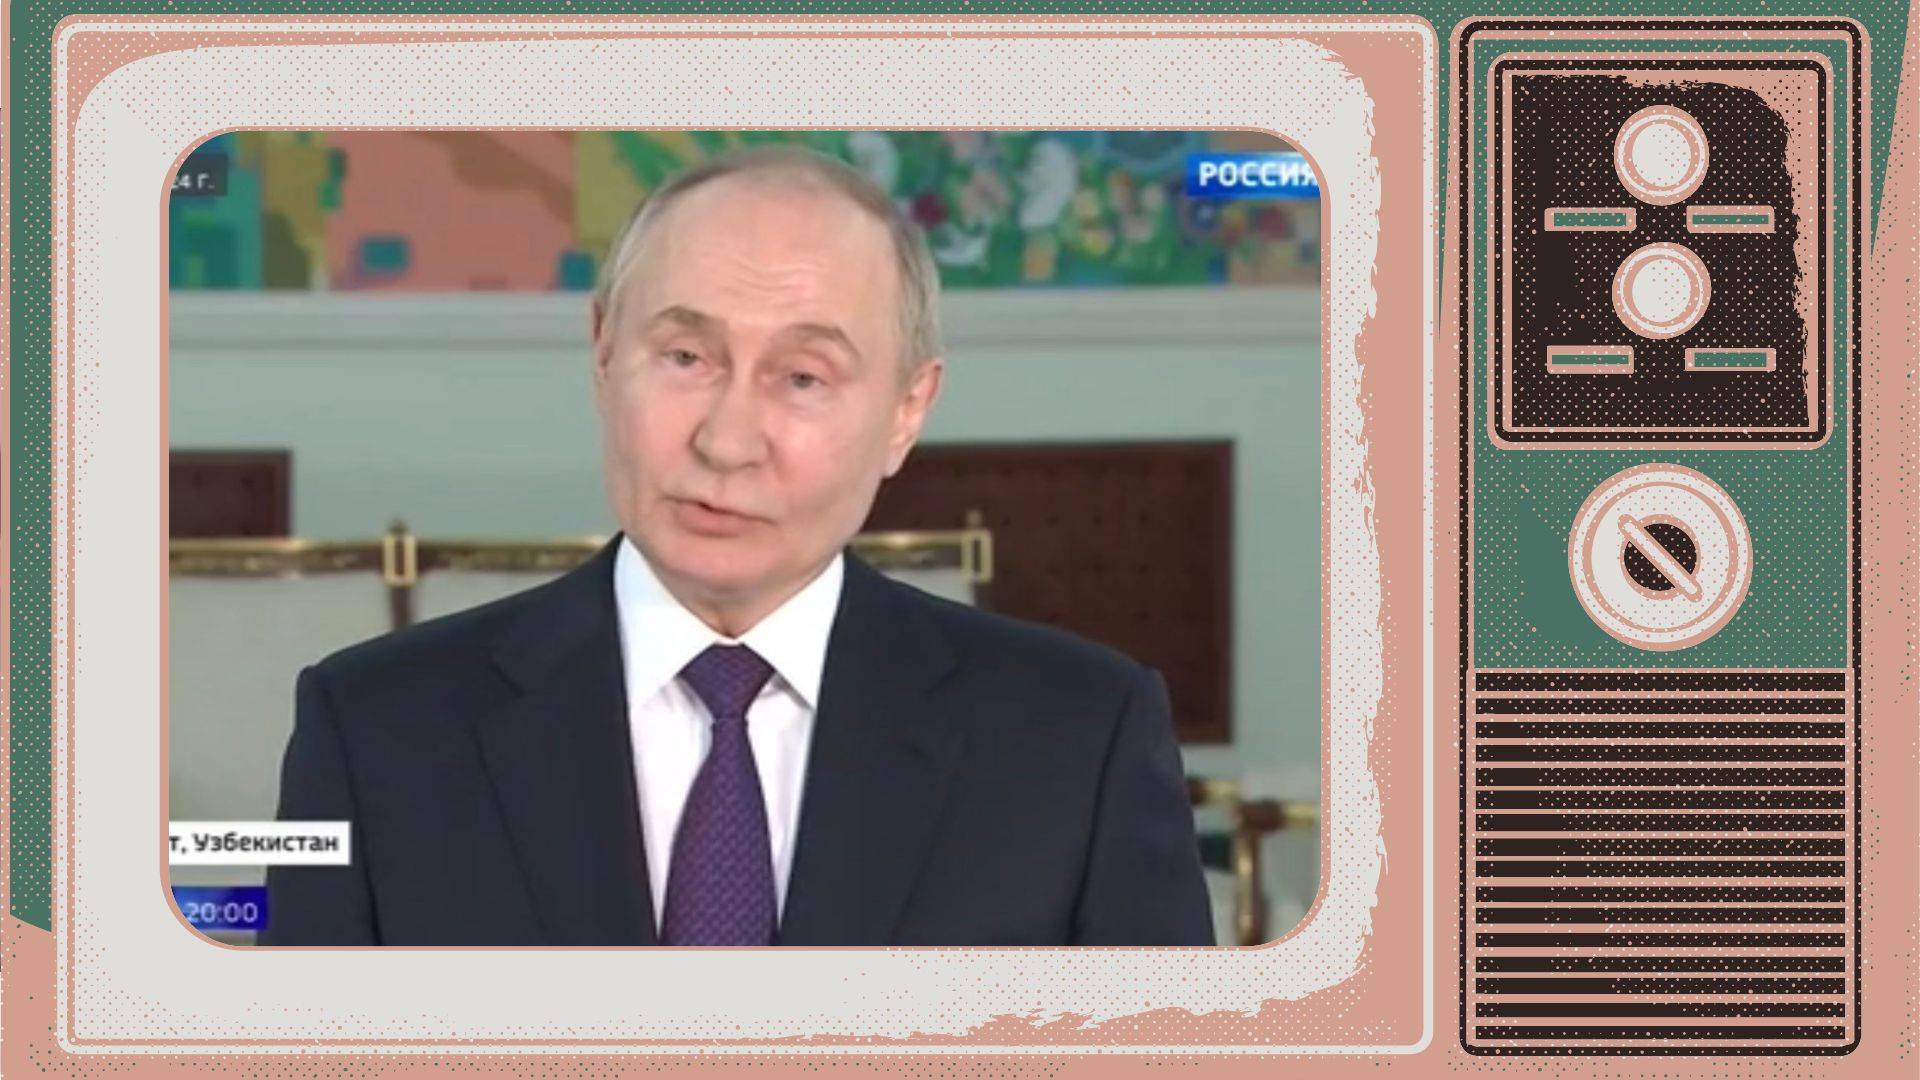 Grafika: Putin w ramce starego telewizora